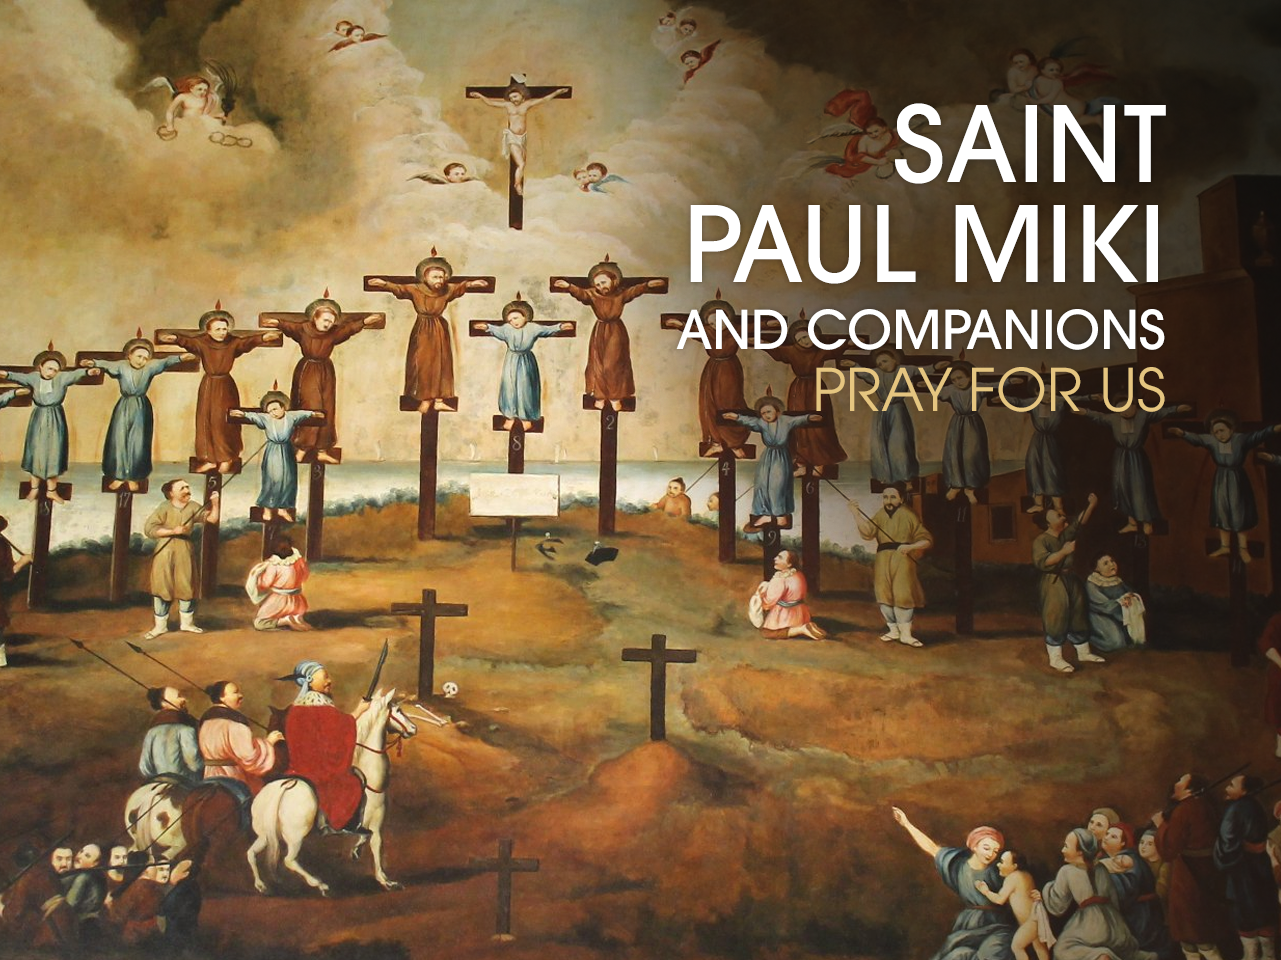 Saint Paul Miki and Companions